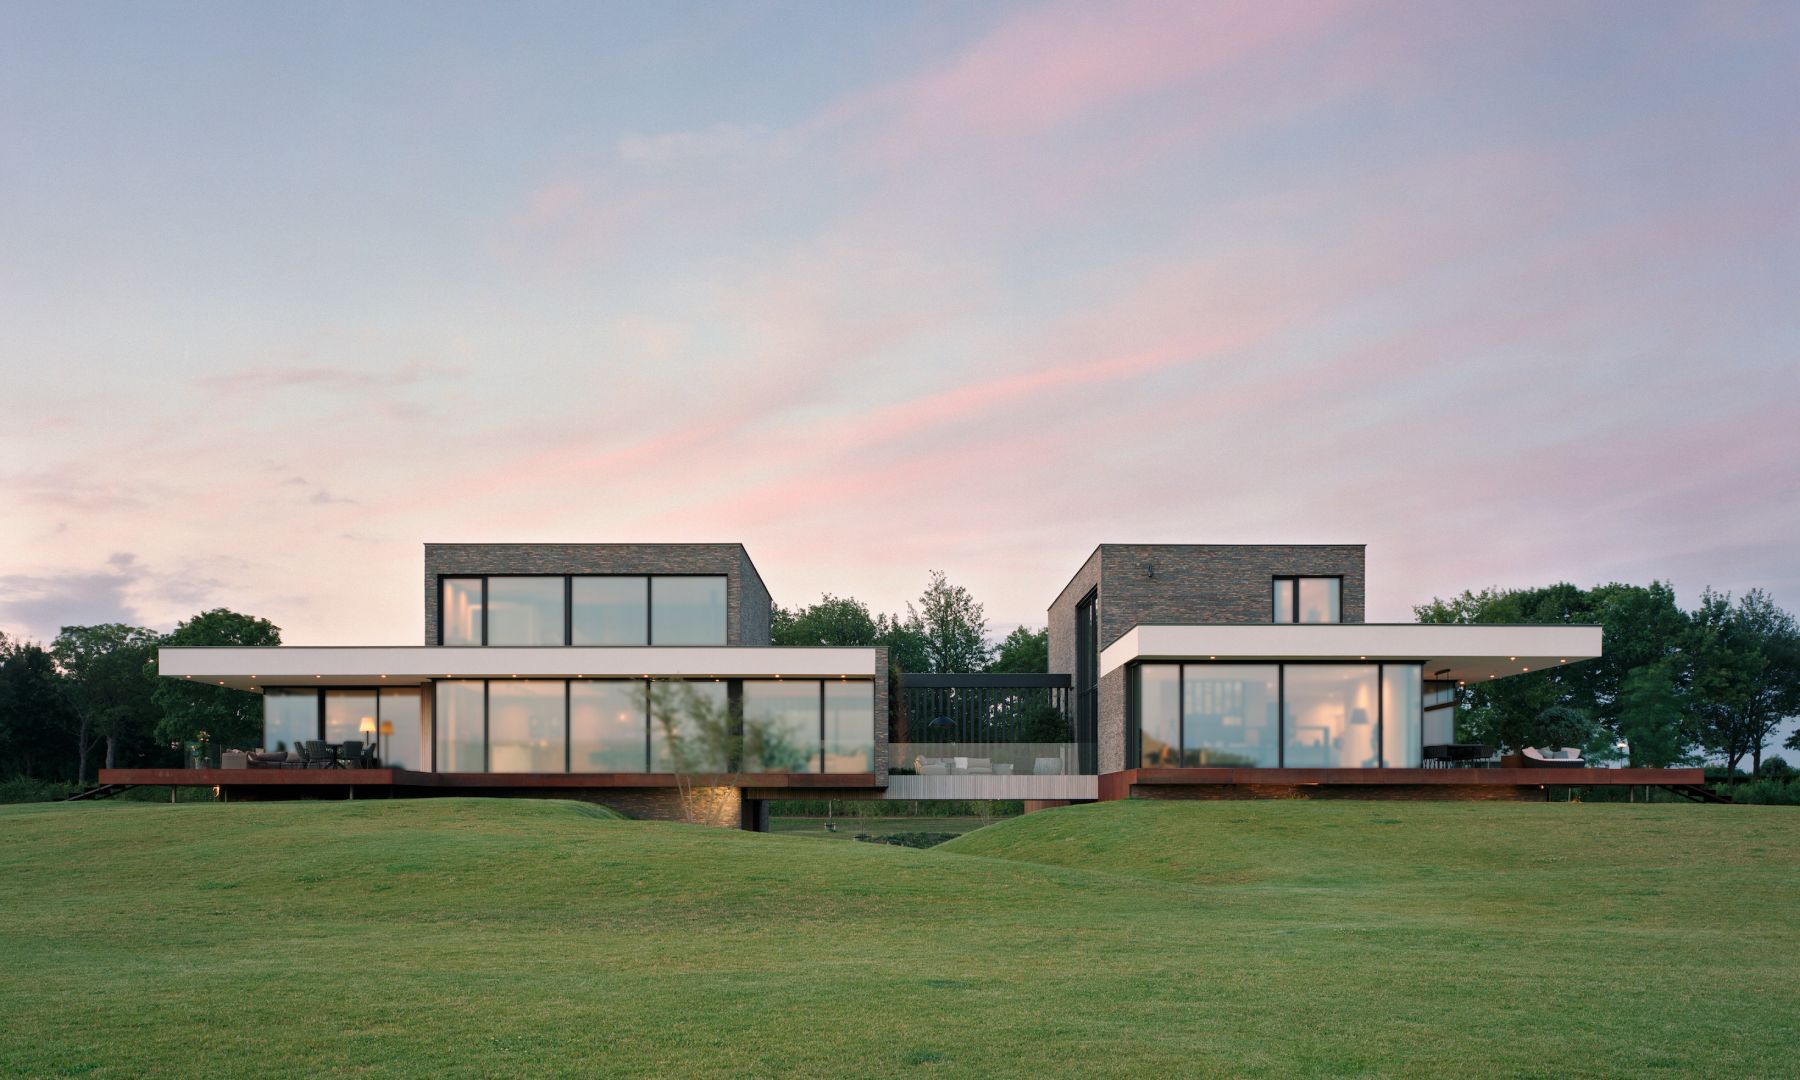 Twee villa's, één ontwerpgedachte  - Limburg, Engelman Architecten